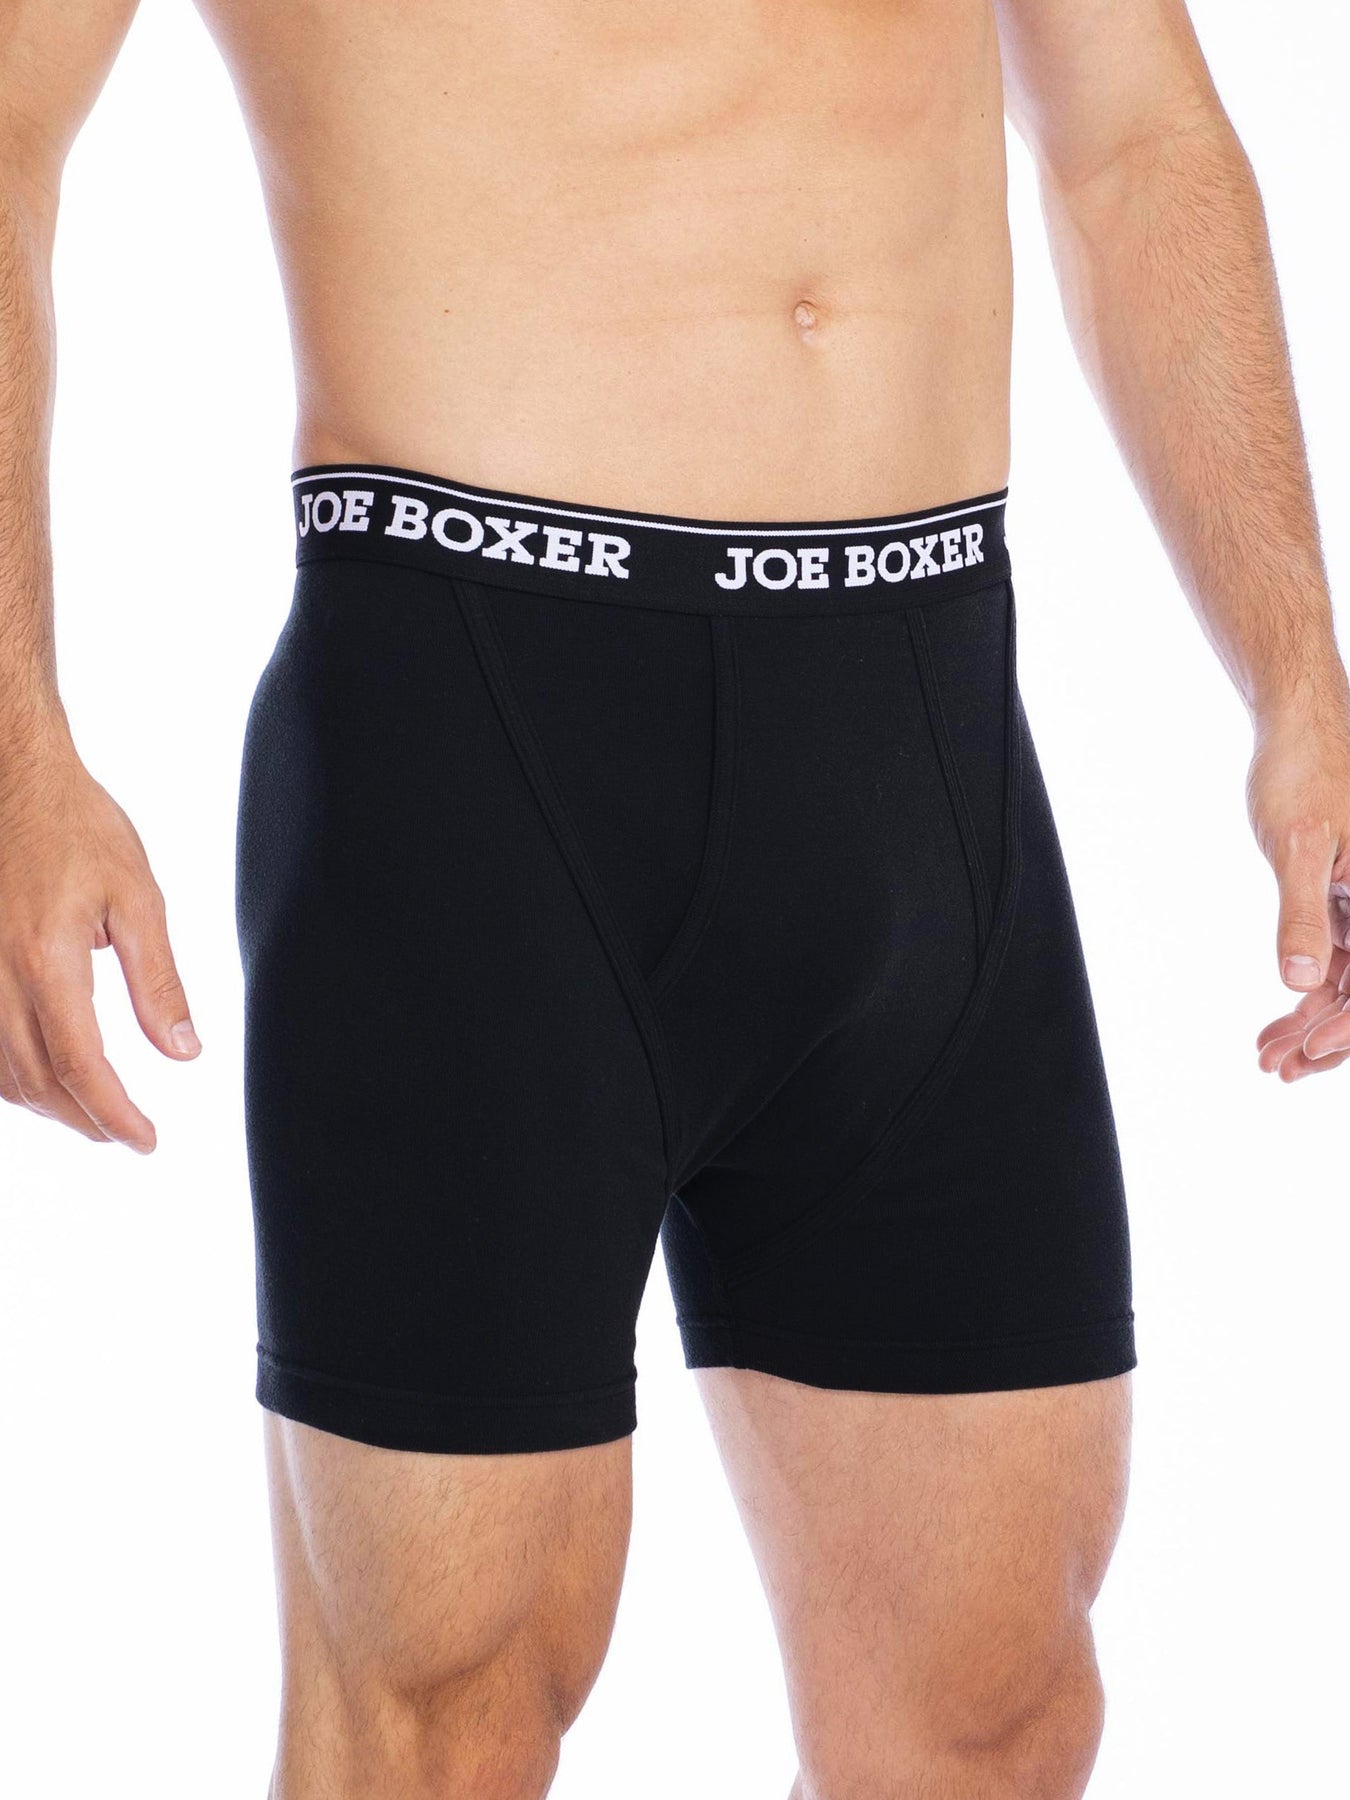 Dream Catcher Boxer Briefs Mens Underwear Men Pack of 1-6 Men's